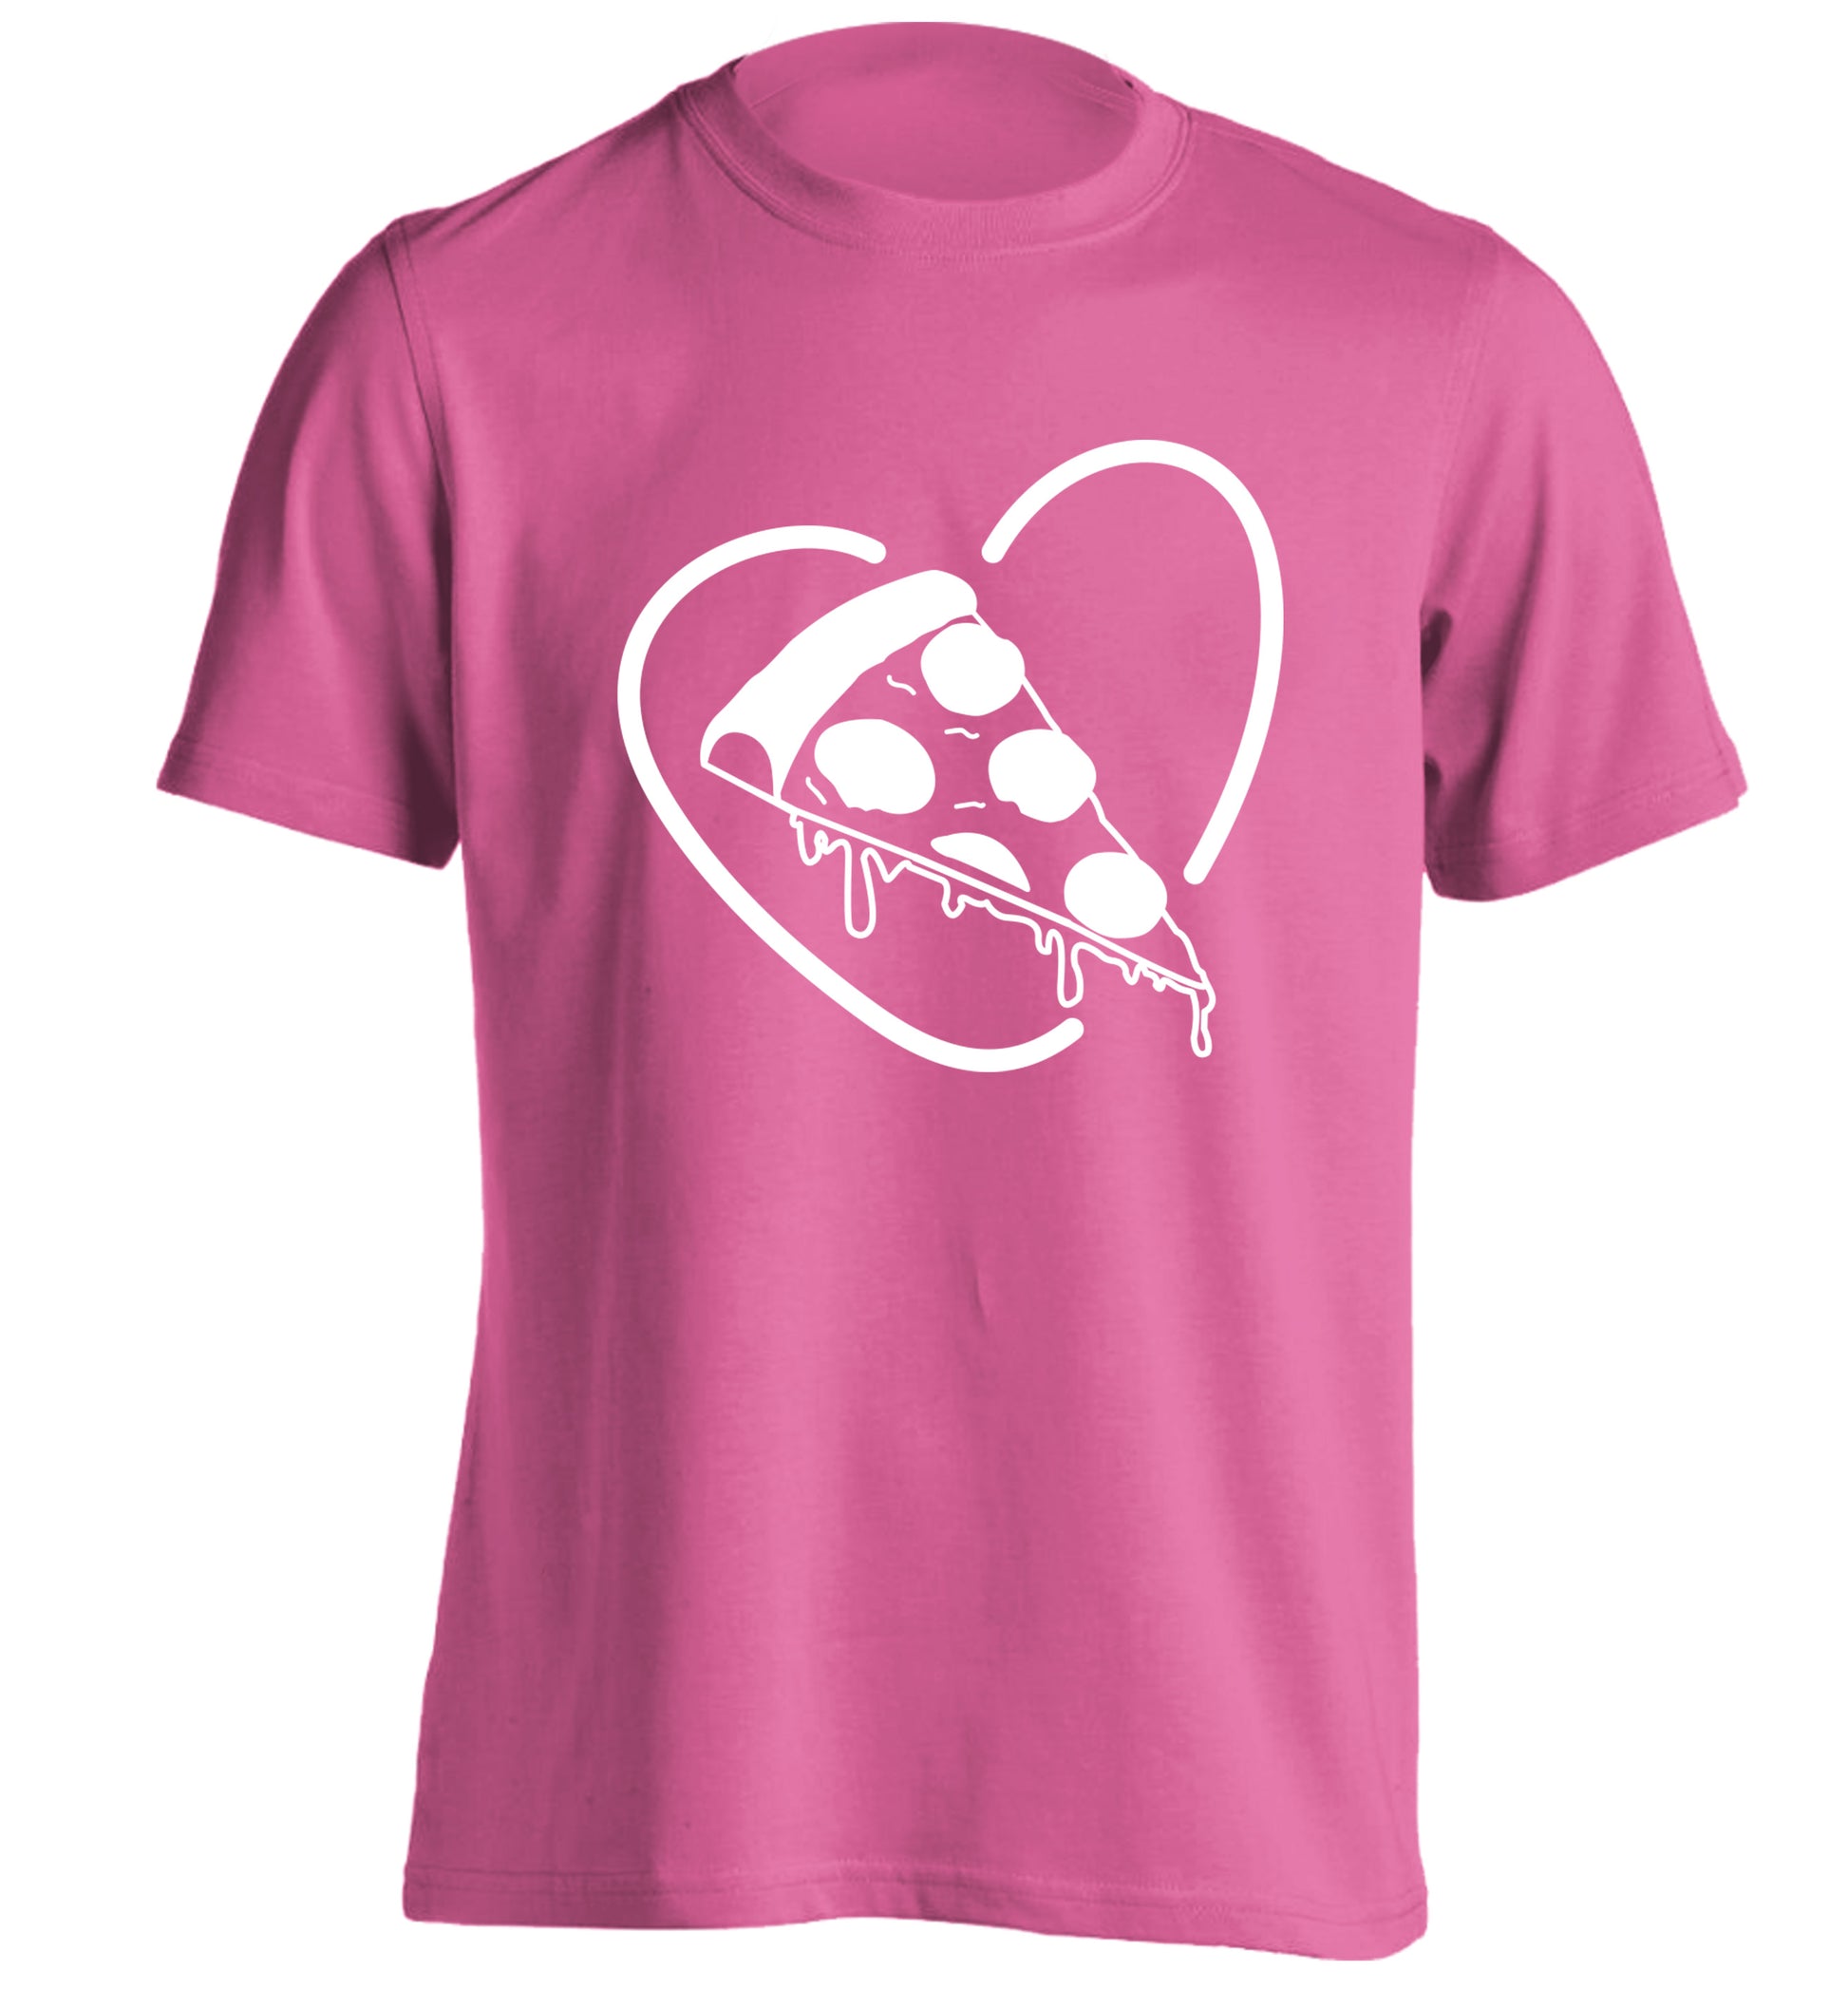 Pizza heart adults unisex pink Tshirt 2XL